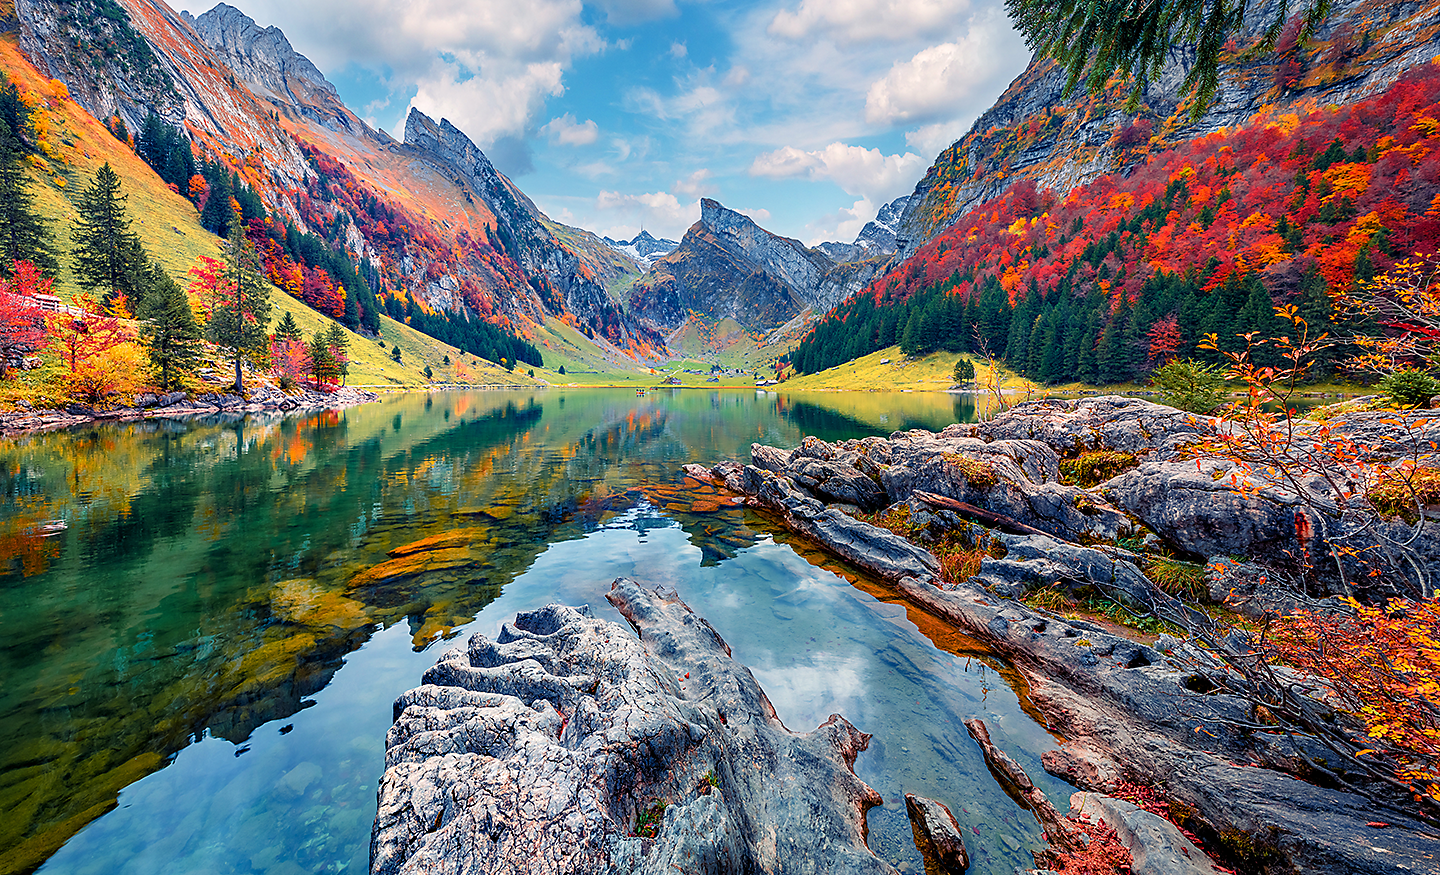 Gambar danau yang dikelilingi pegunungan dan pepohonan dengan warna yang sangat kaya dan hidup